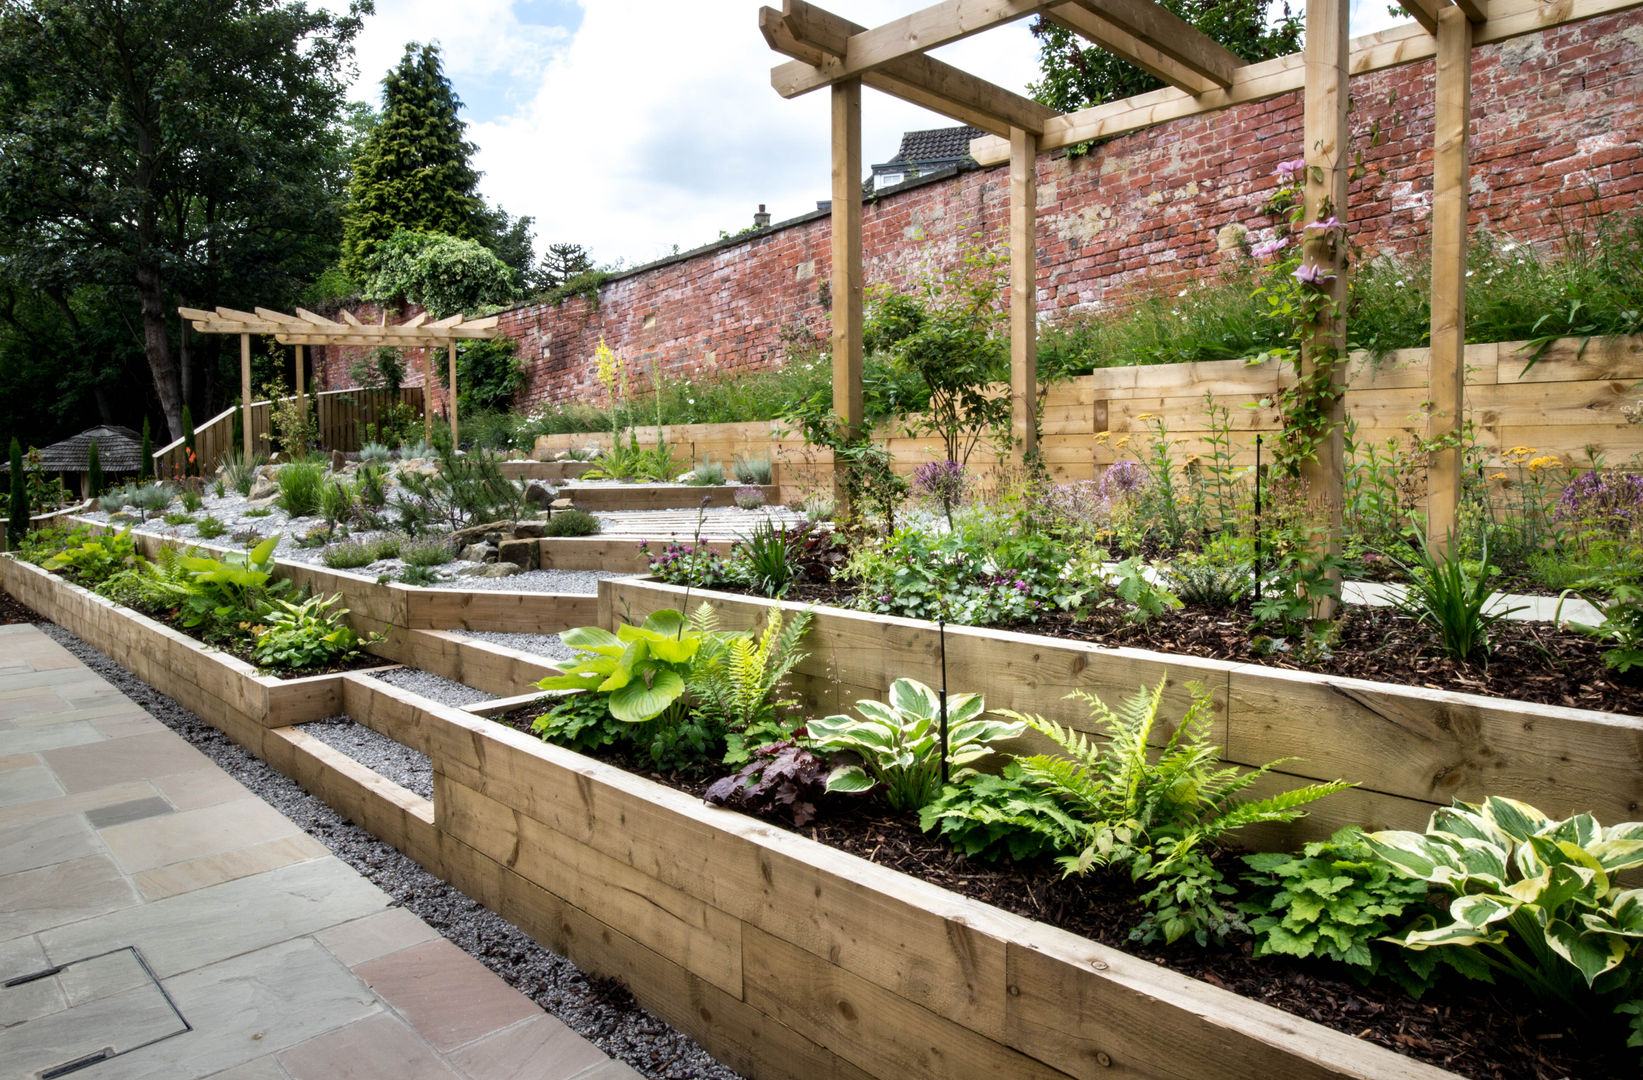 Modern Garden with a rustic twist Yorkshire Gardens حديقة raised beds,railway sleepers,sleepers,pergola